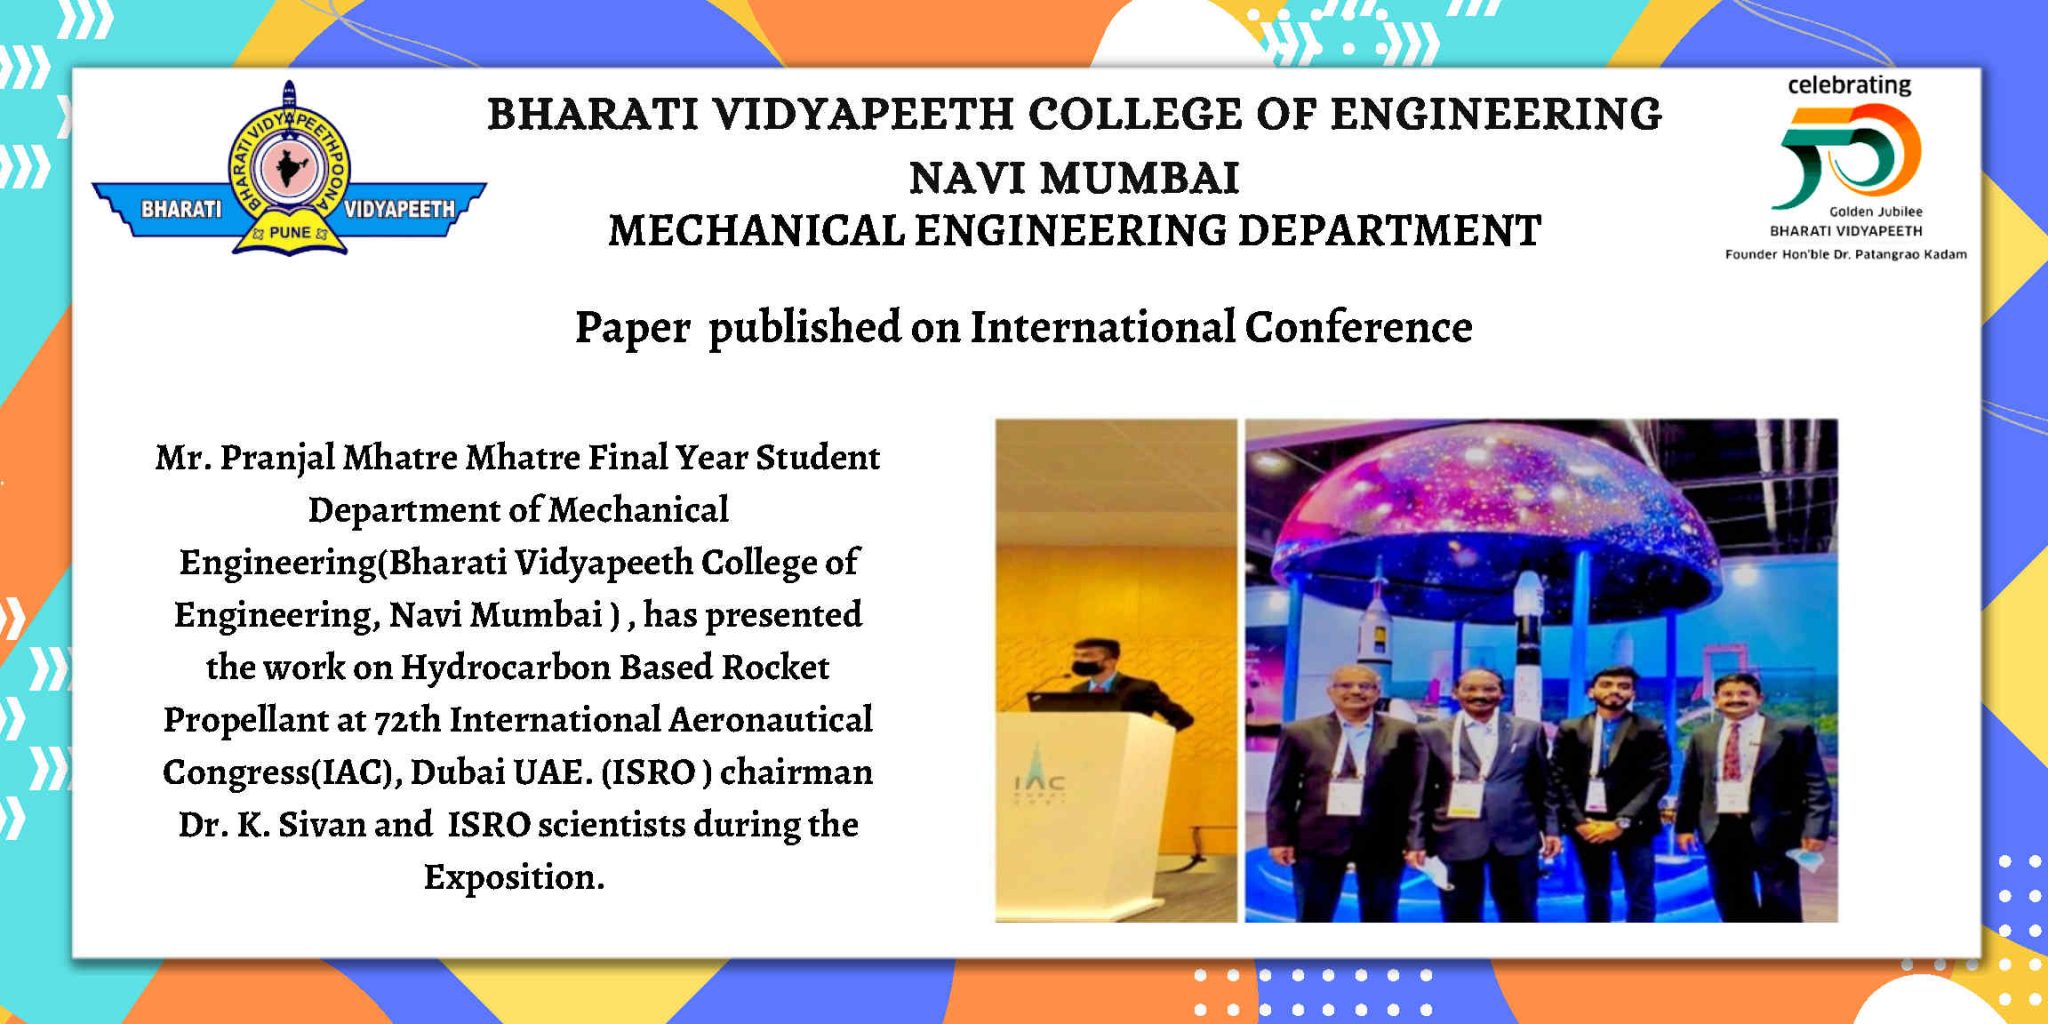 BHARATI VIDYAPEETH COLLEGE OF ENGINEERING NAVI MUMBAI_Page4